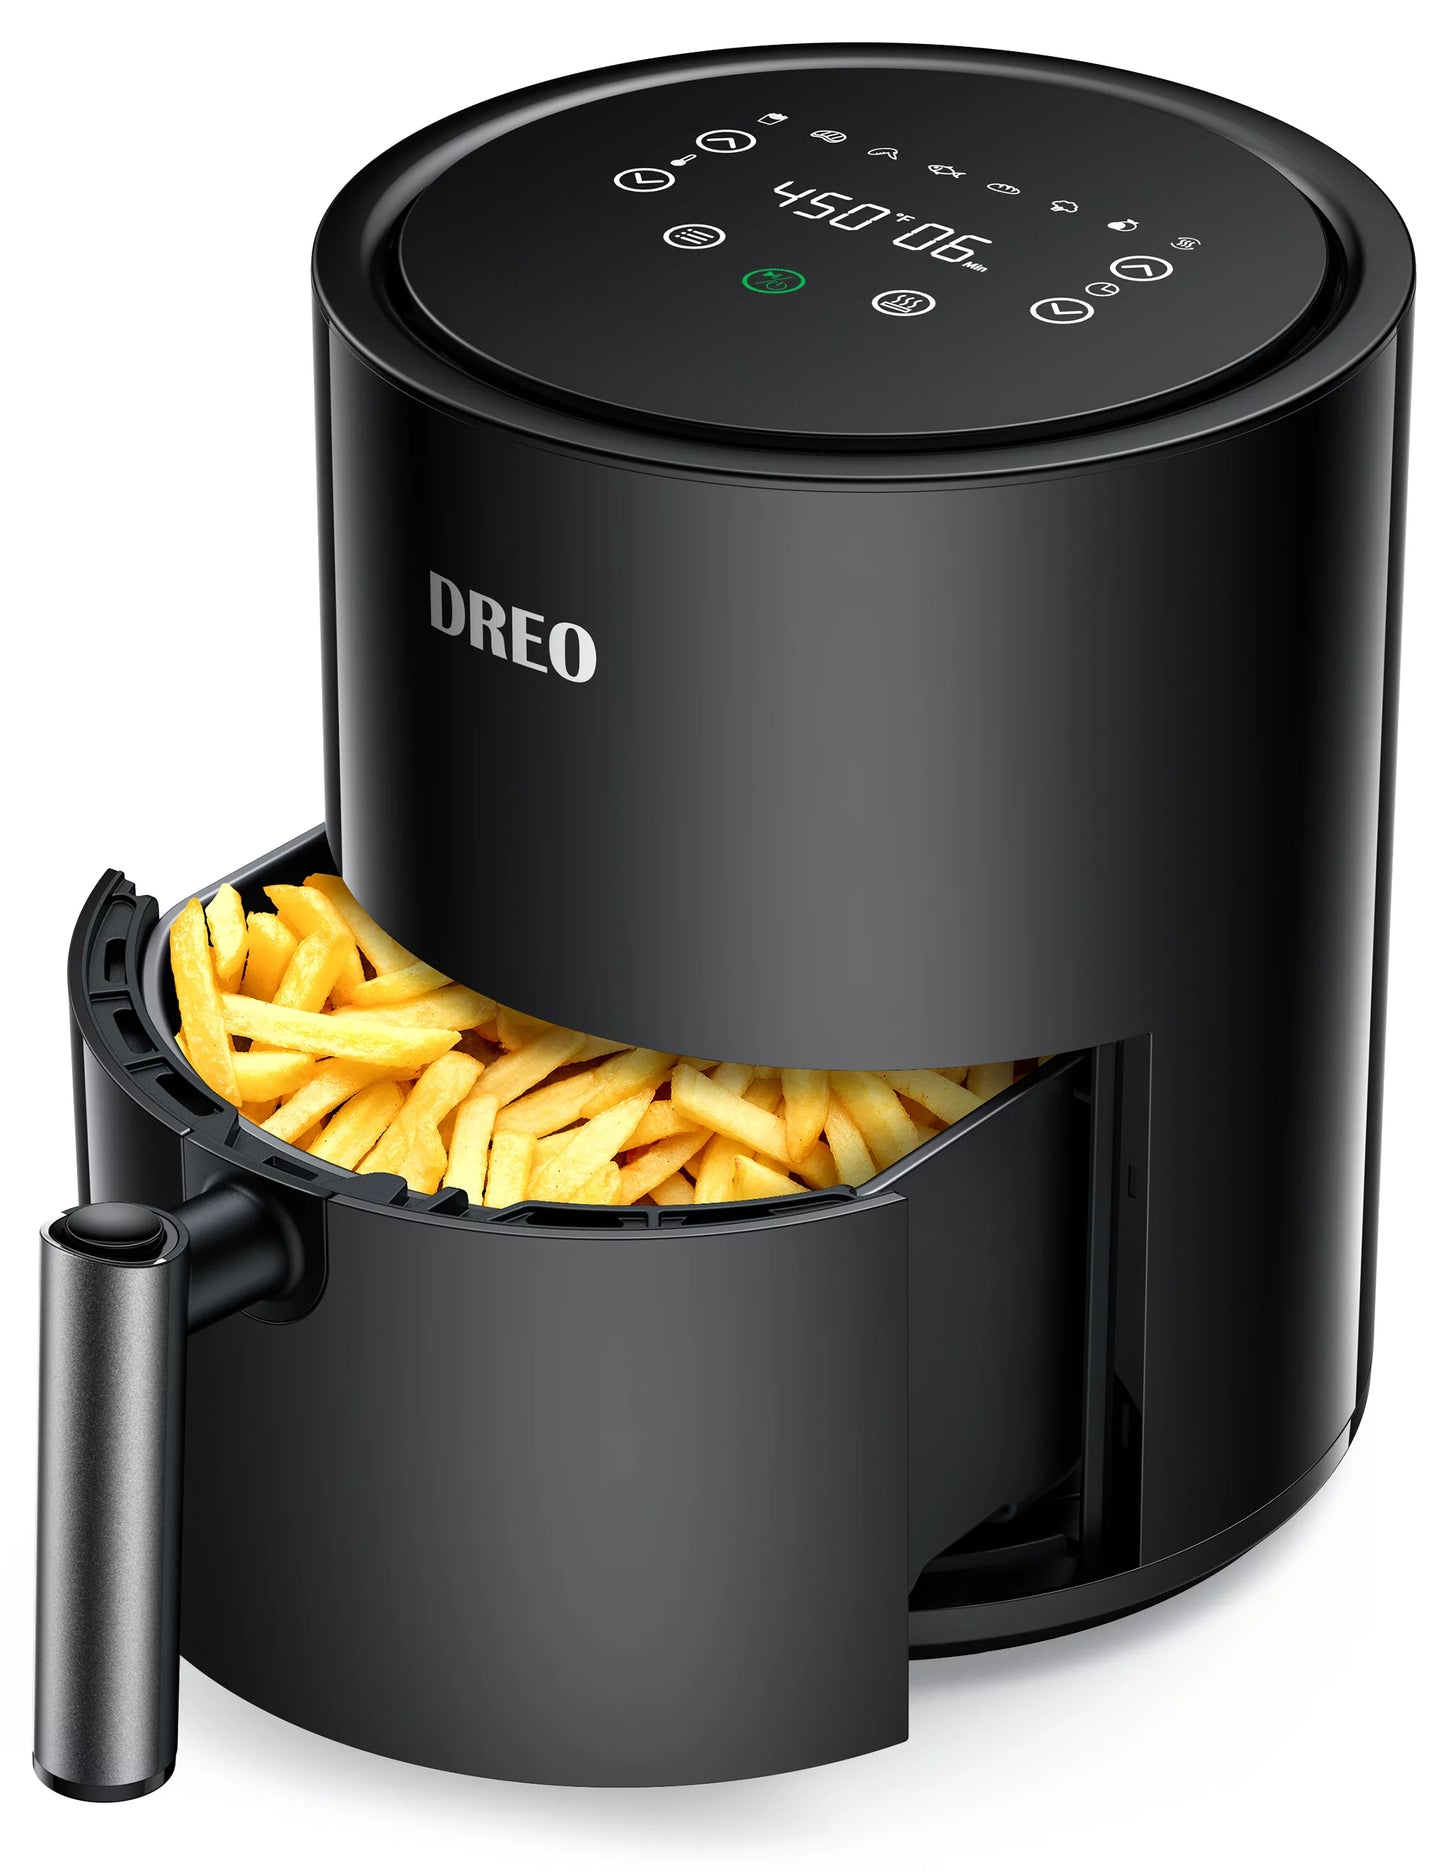 Dreo Air Fryer Pro Plus 10 Quart Capacity, White, 1500 Watts - Dreo